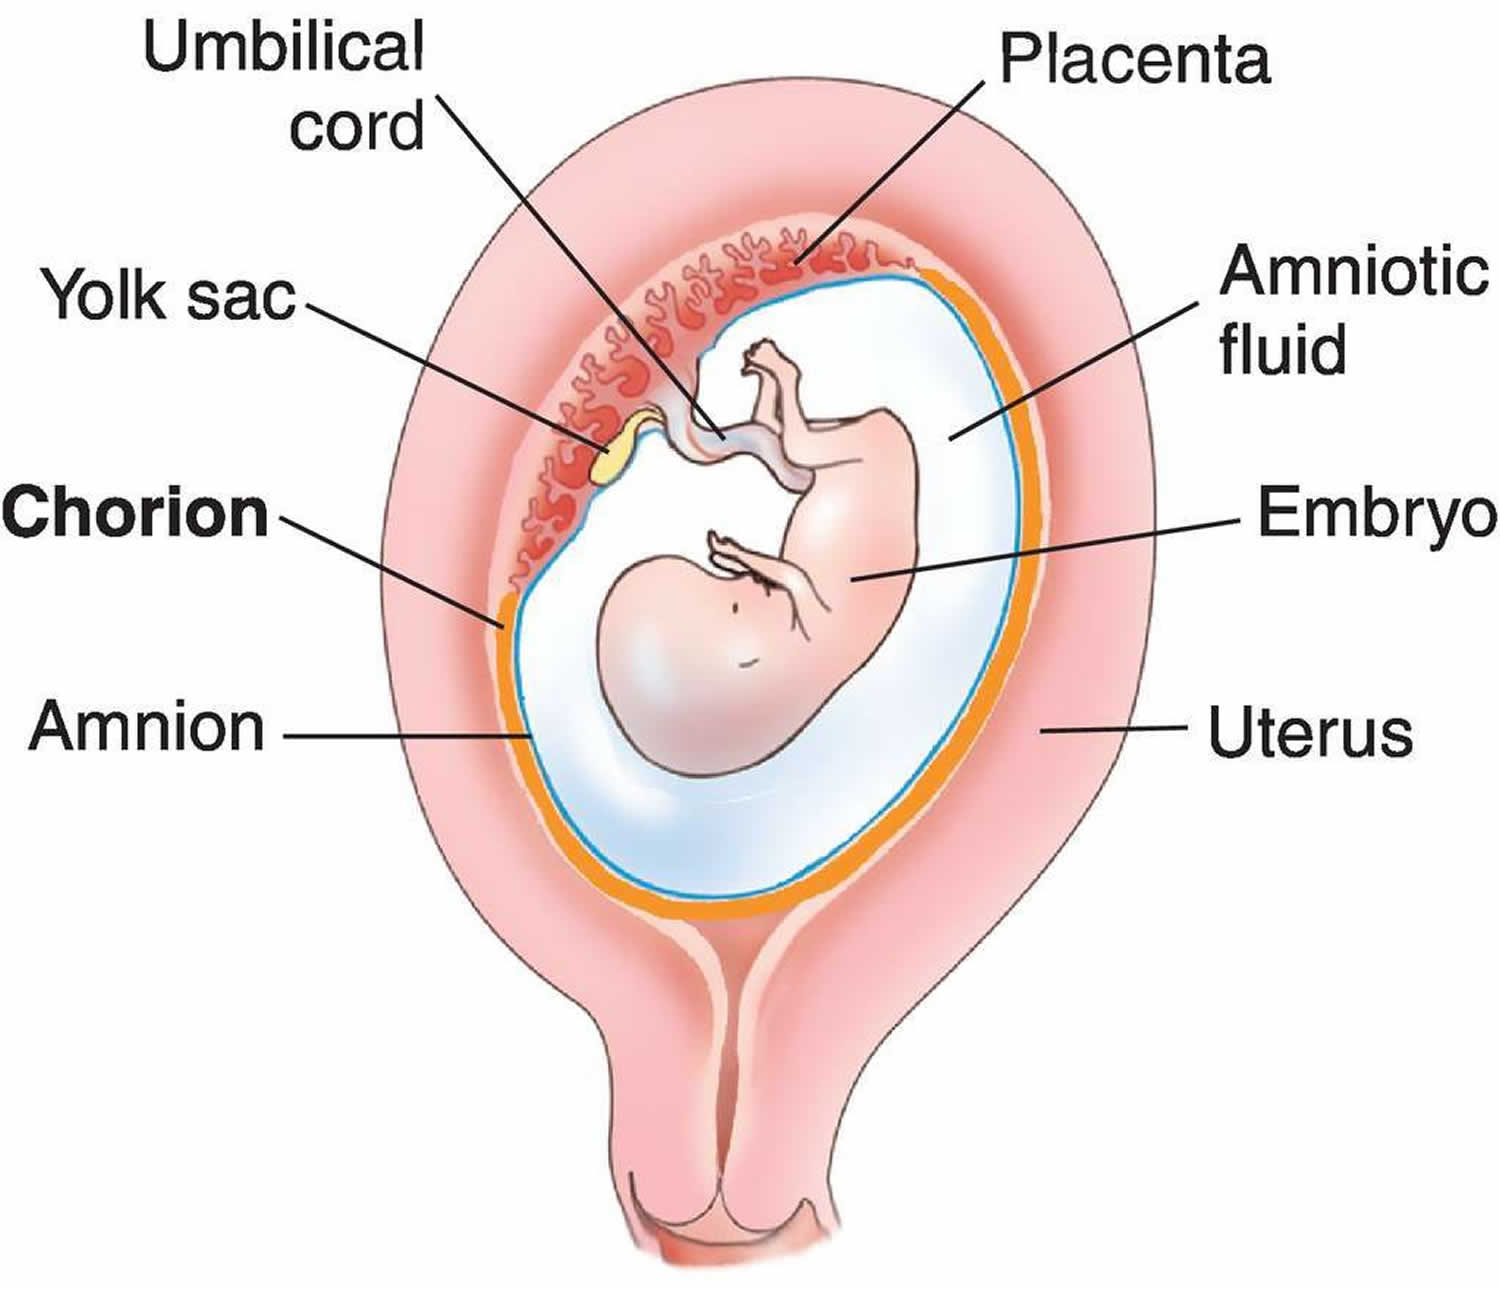 placenta anatomy